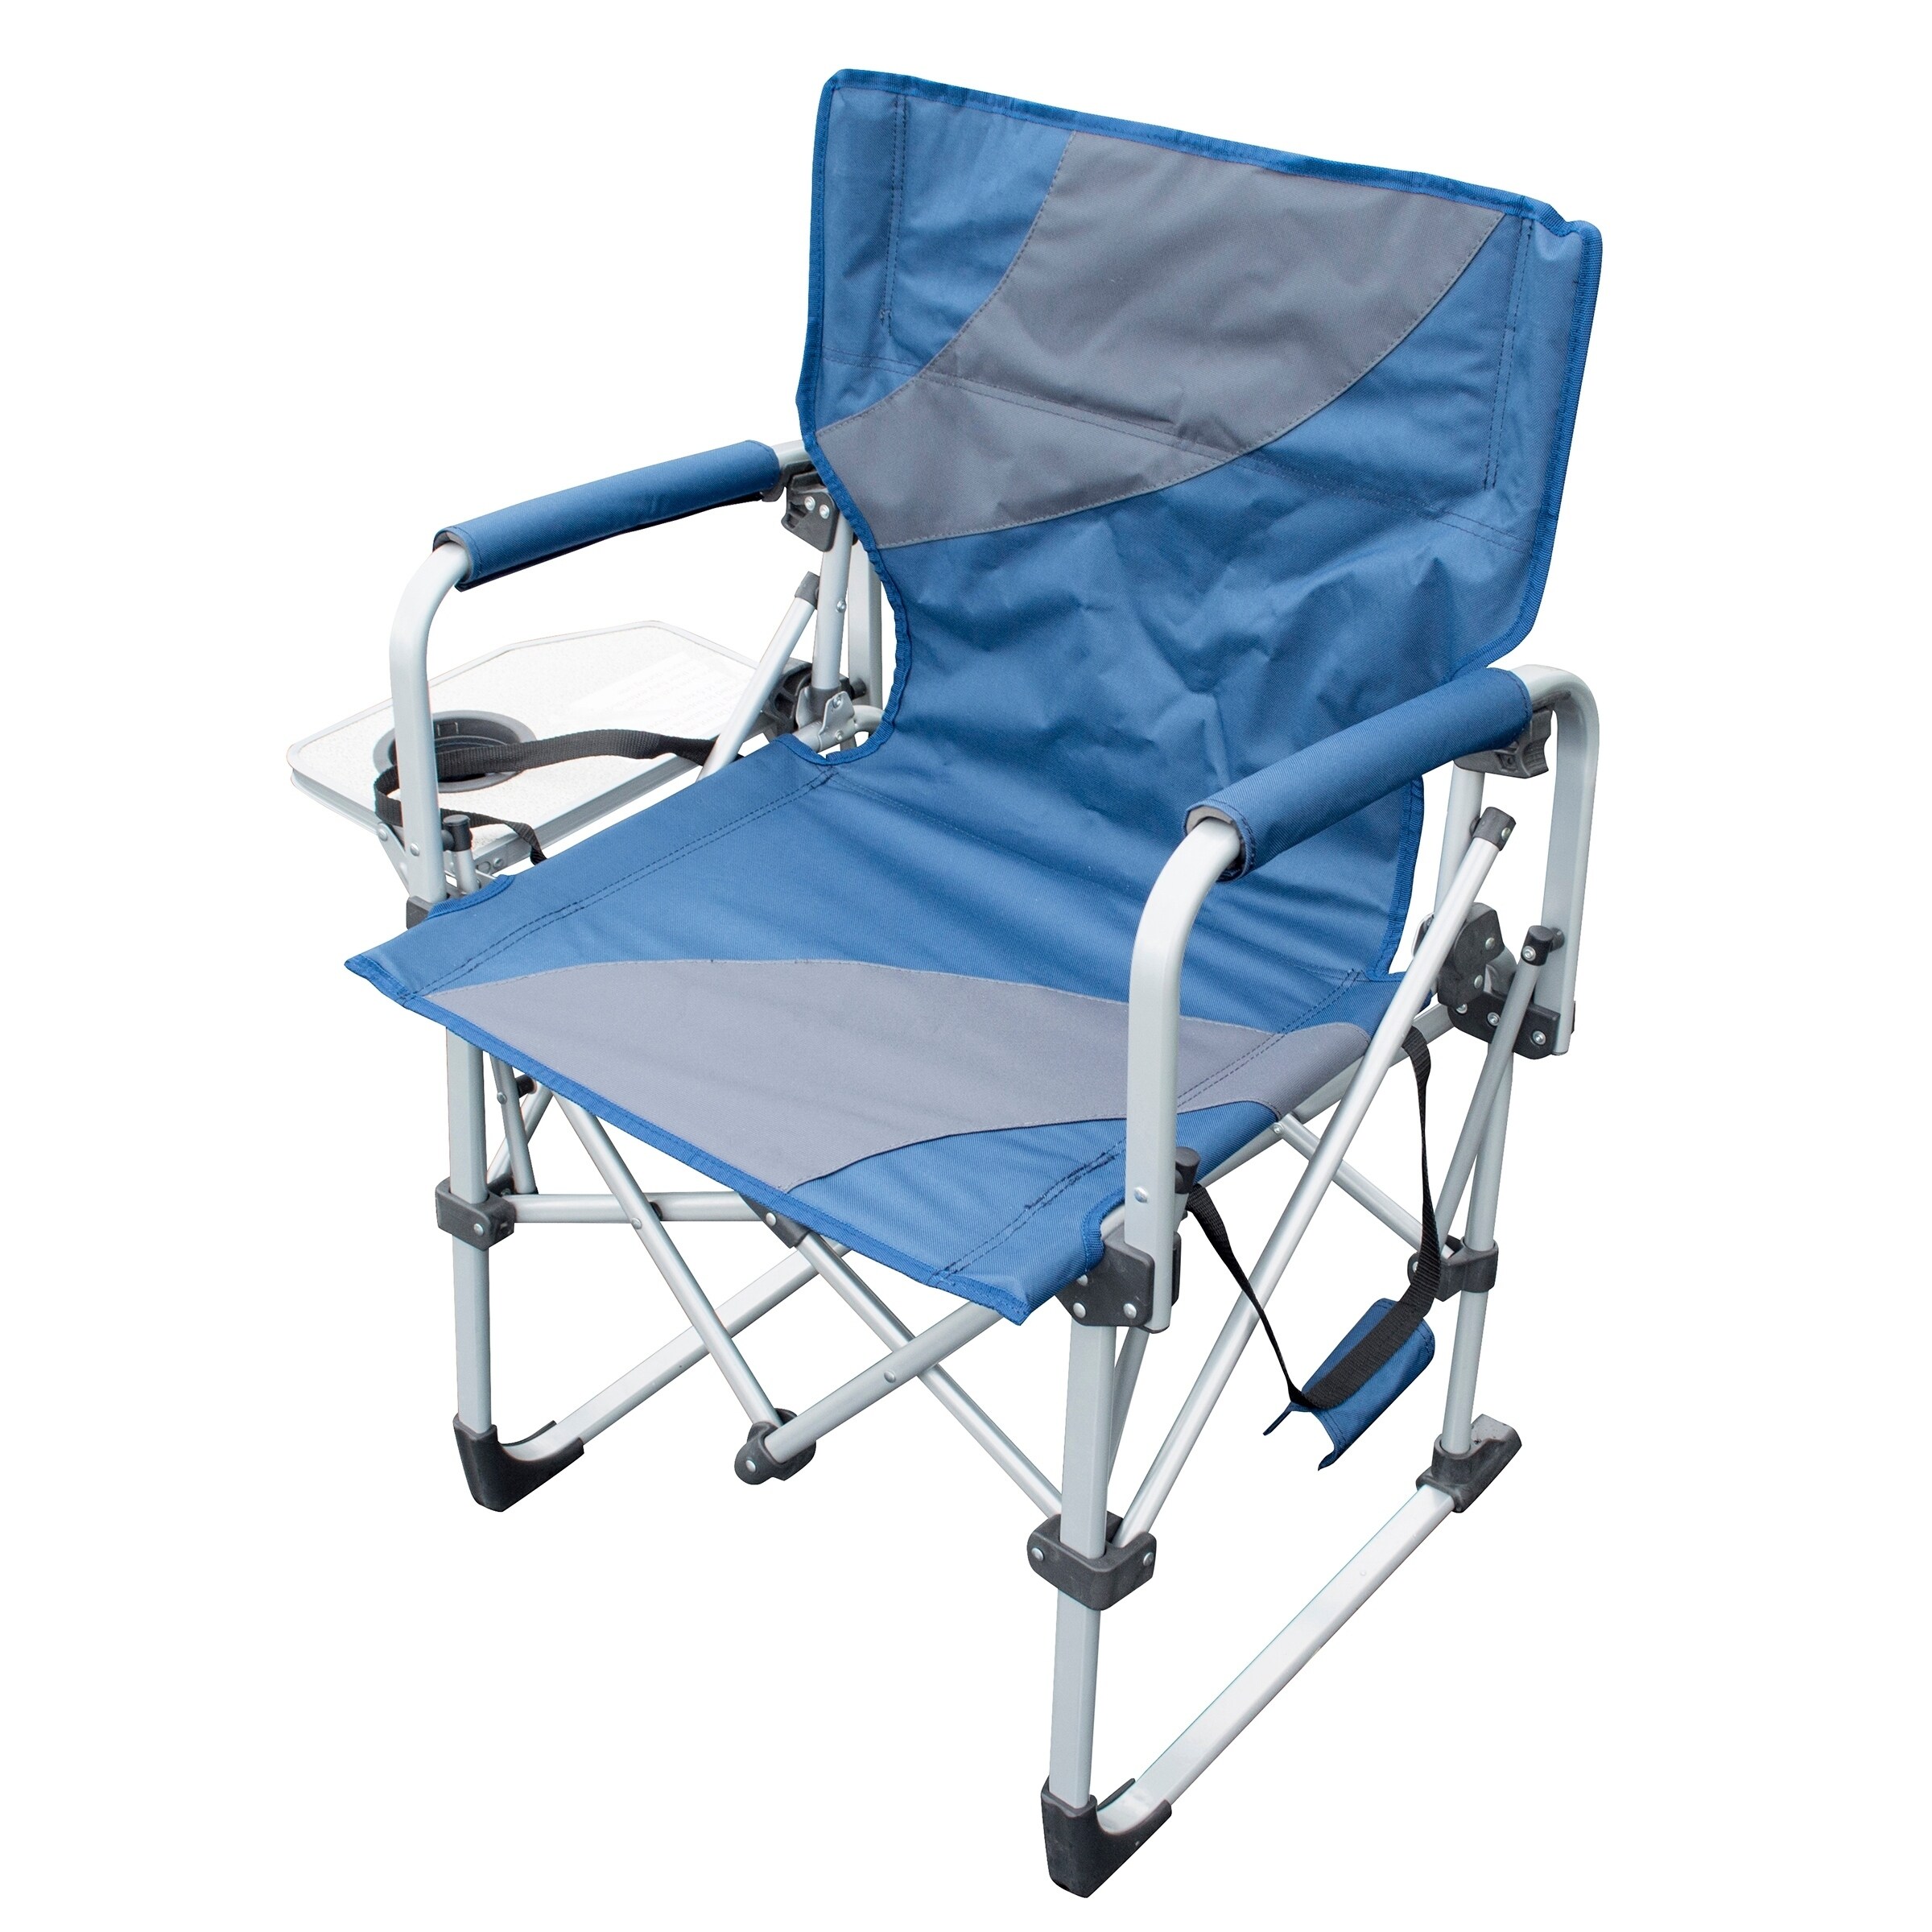 Foldup Camping Chairs